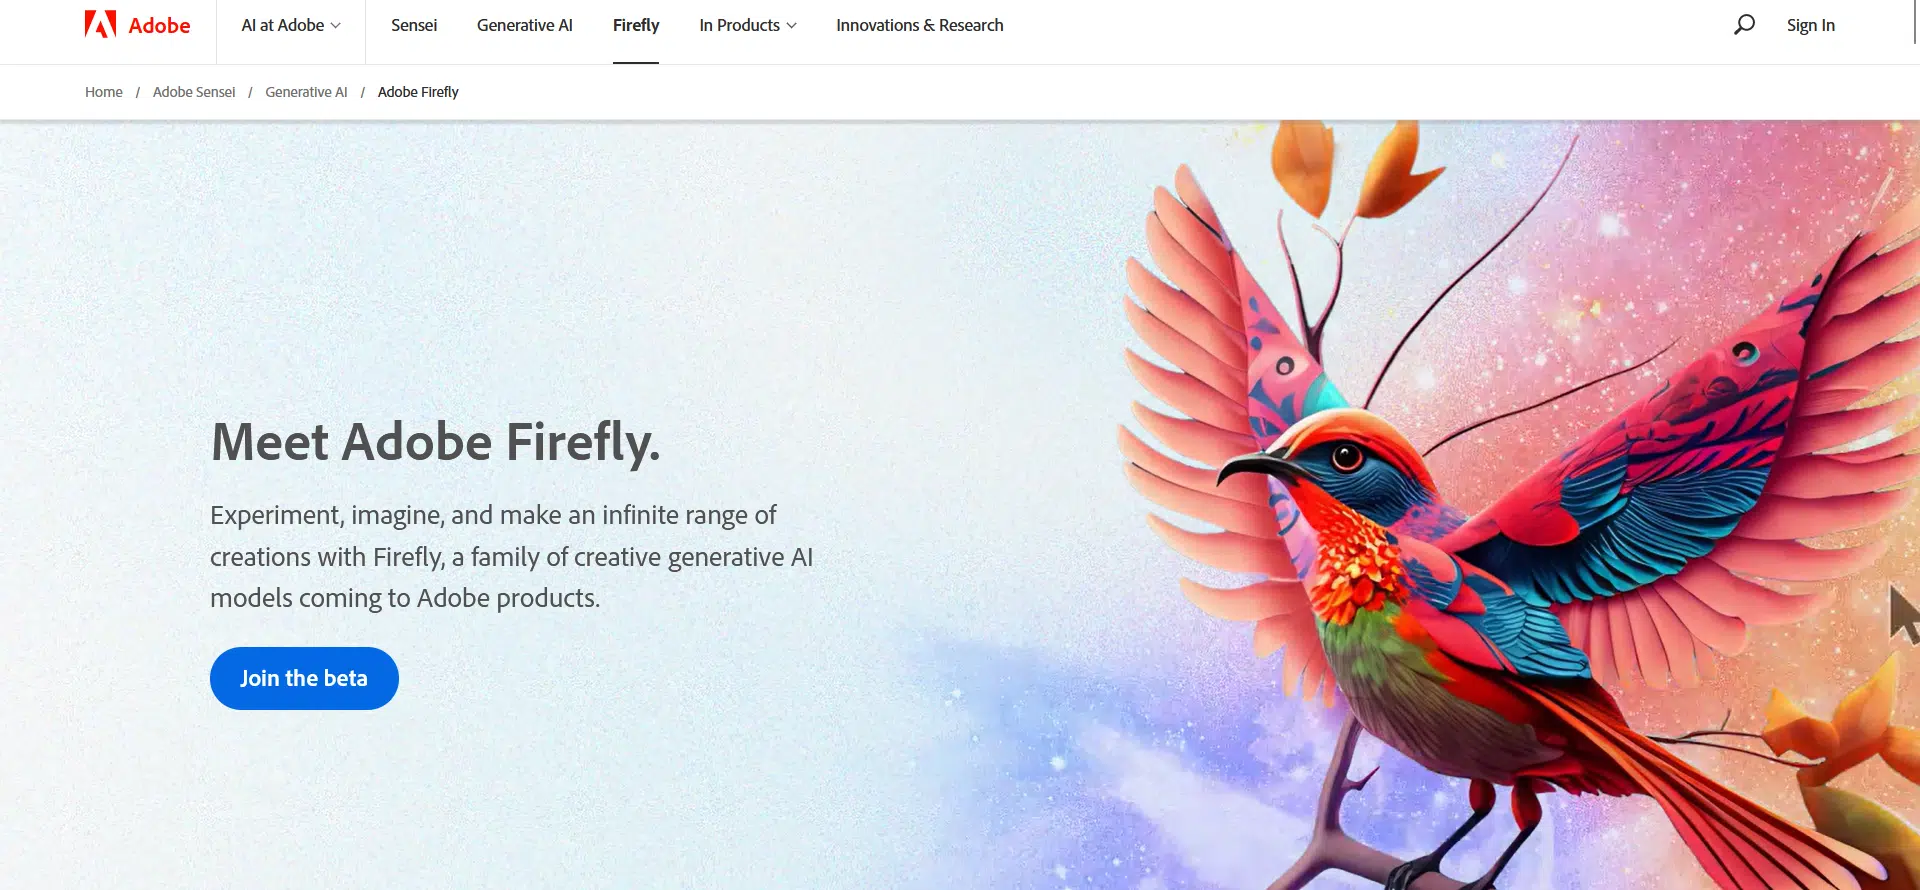 Adobe Fireflywebsite picture